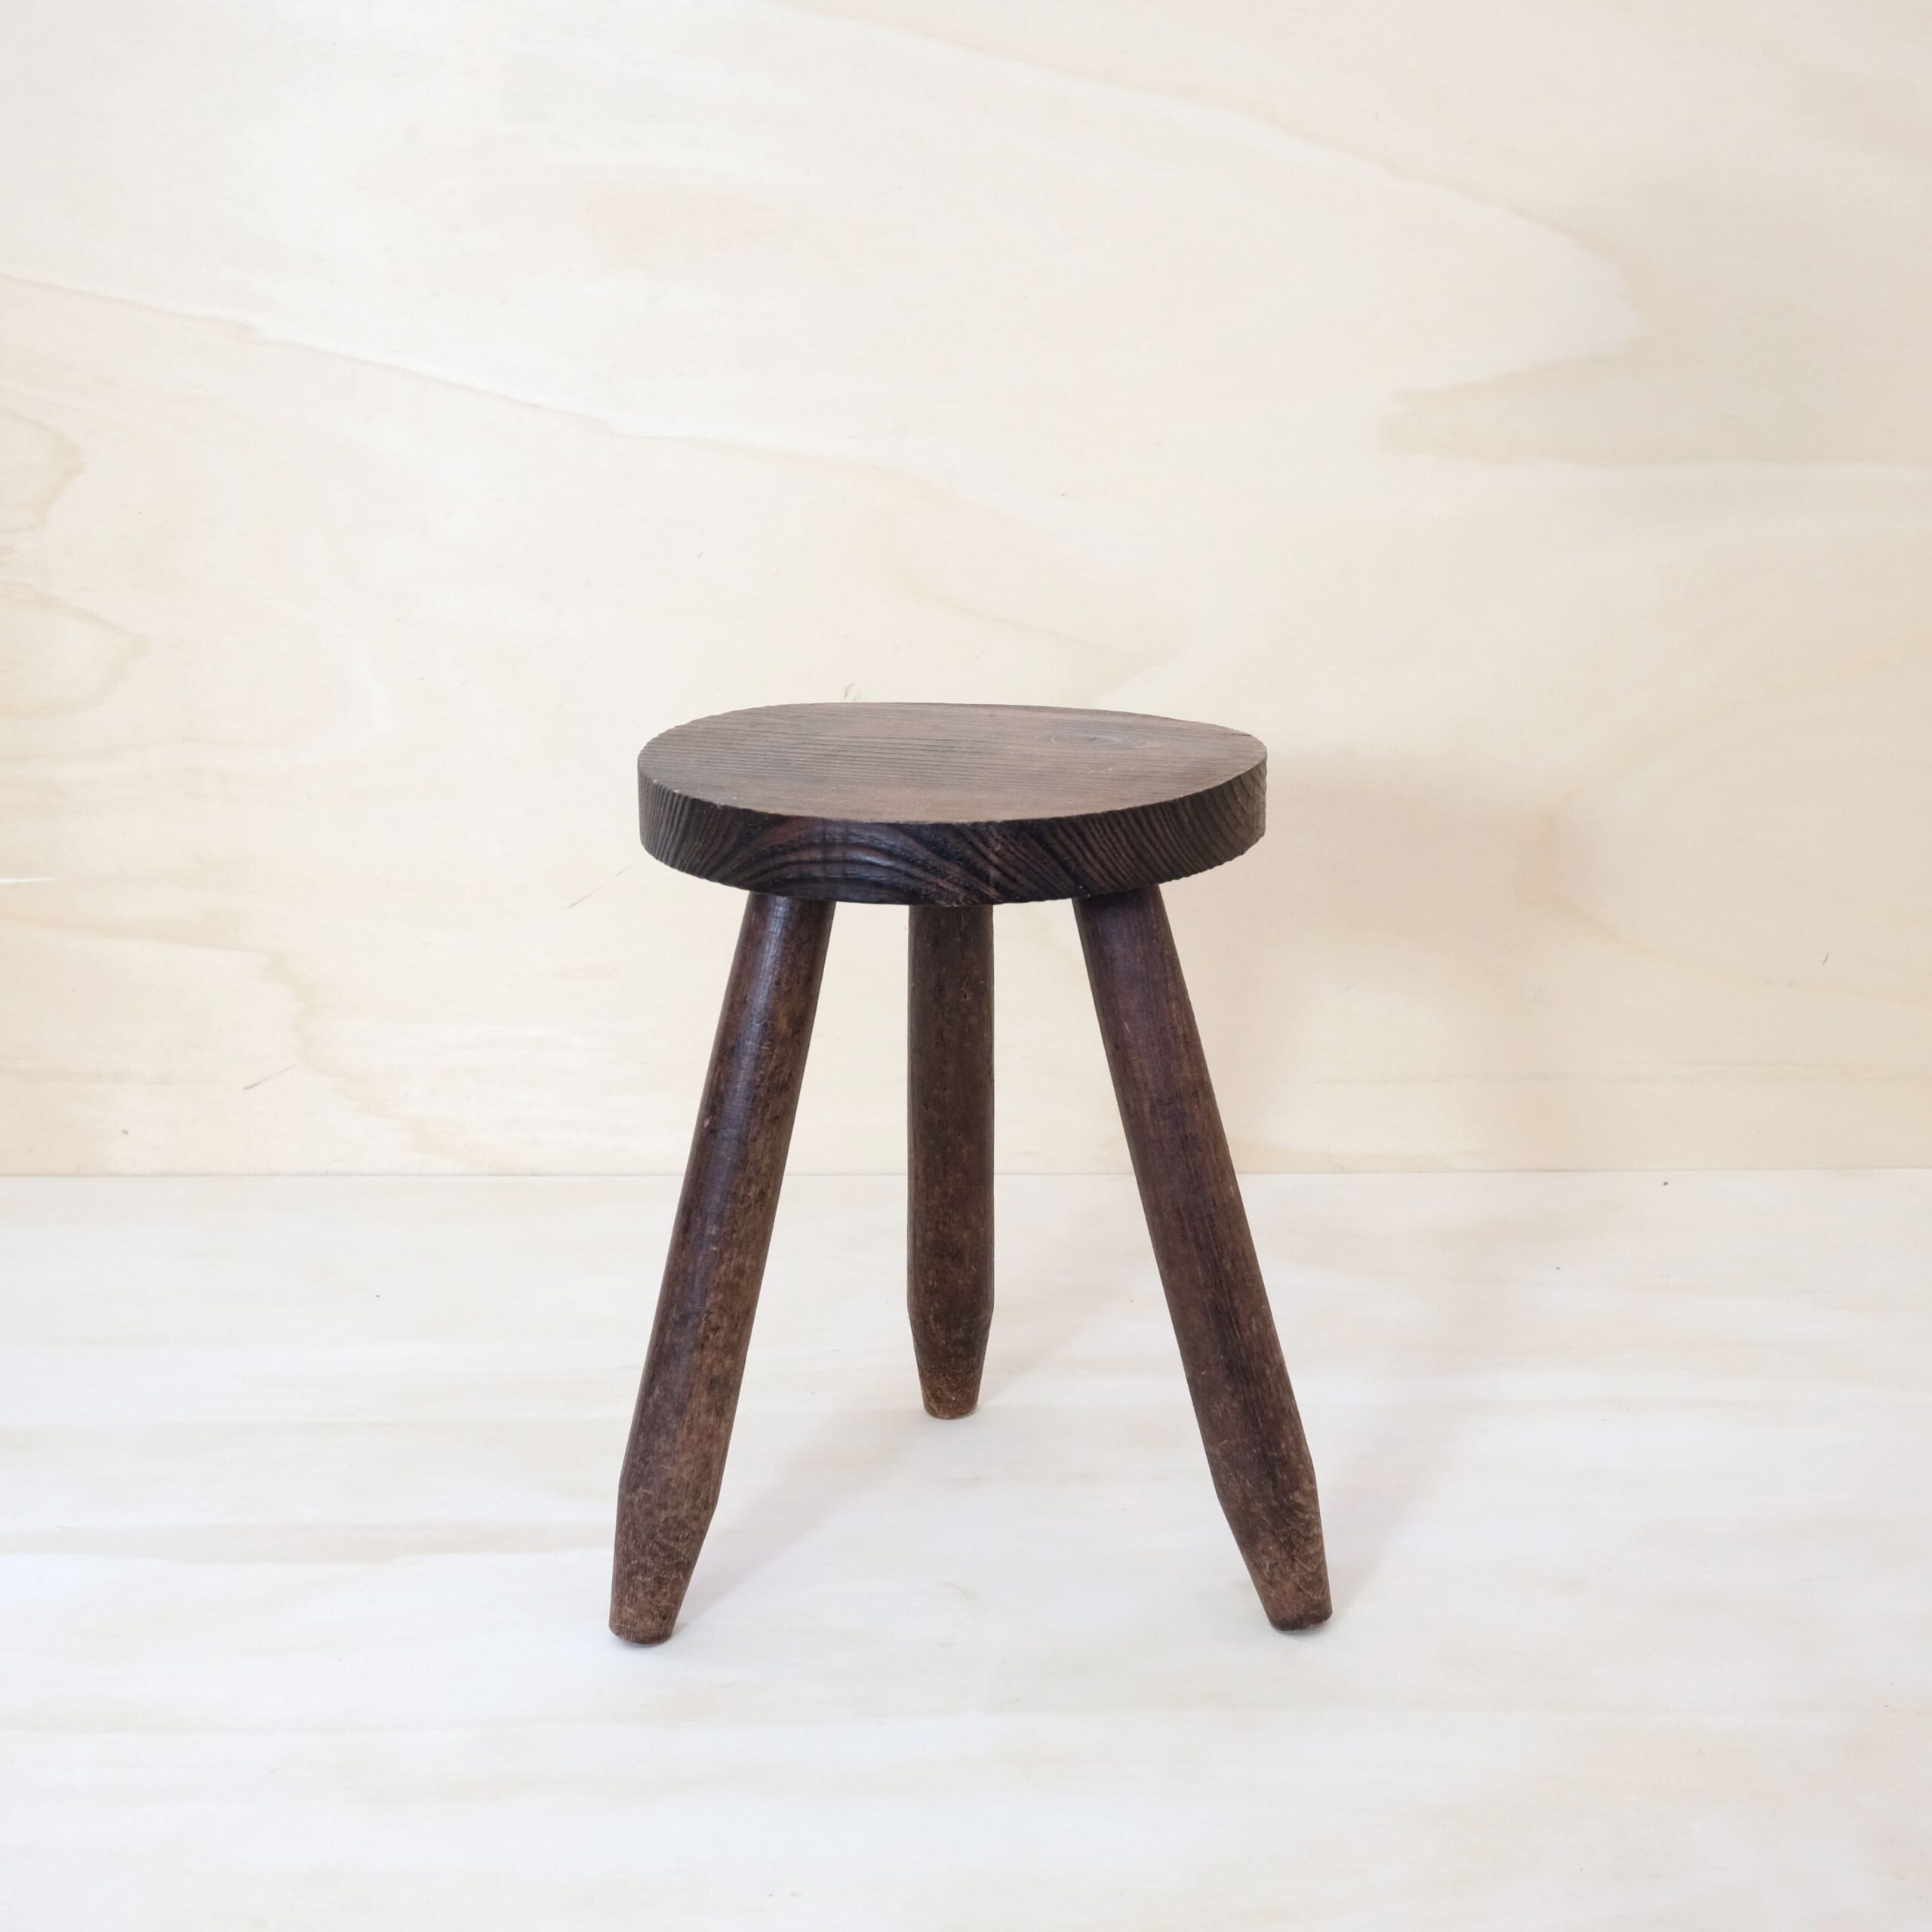 Tripod stool made of wood tinted dark.